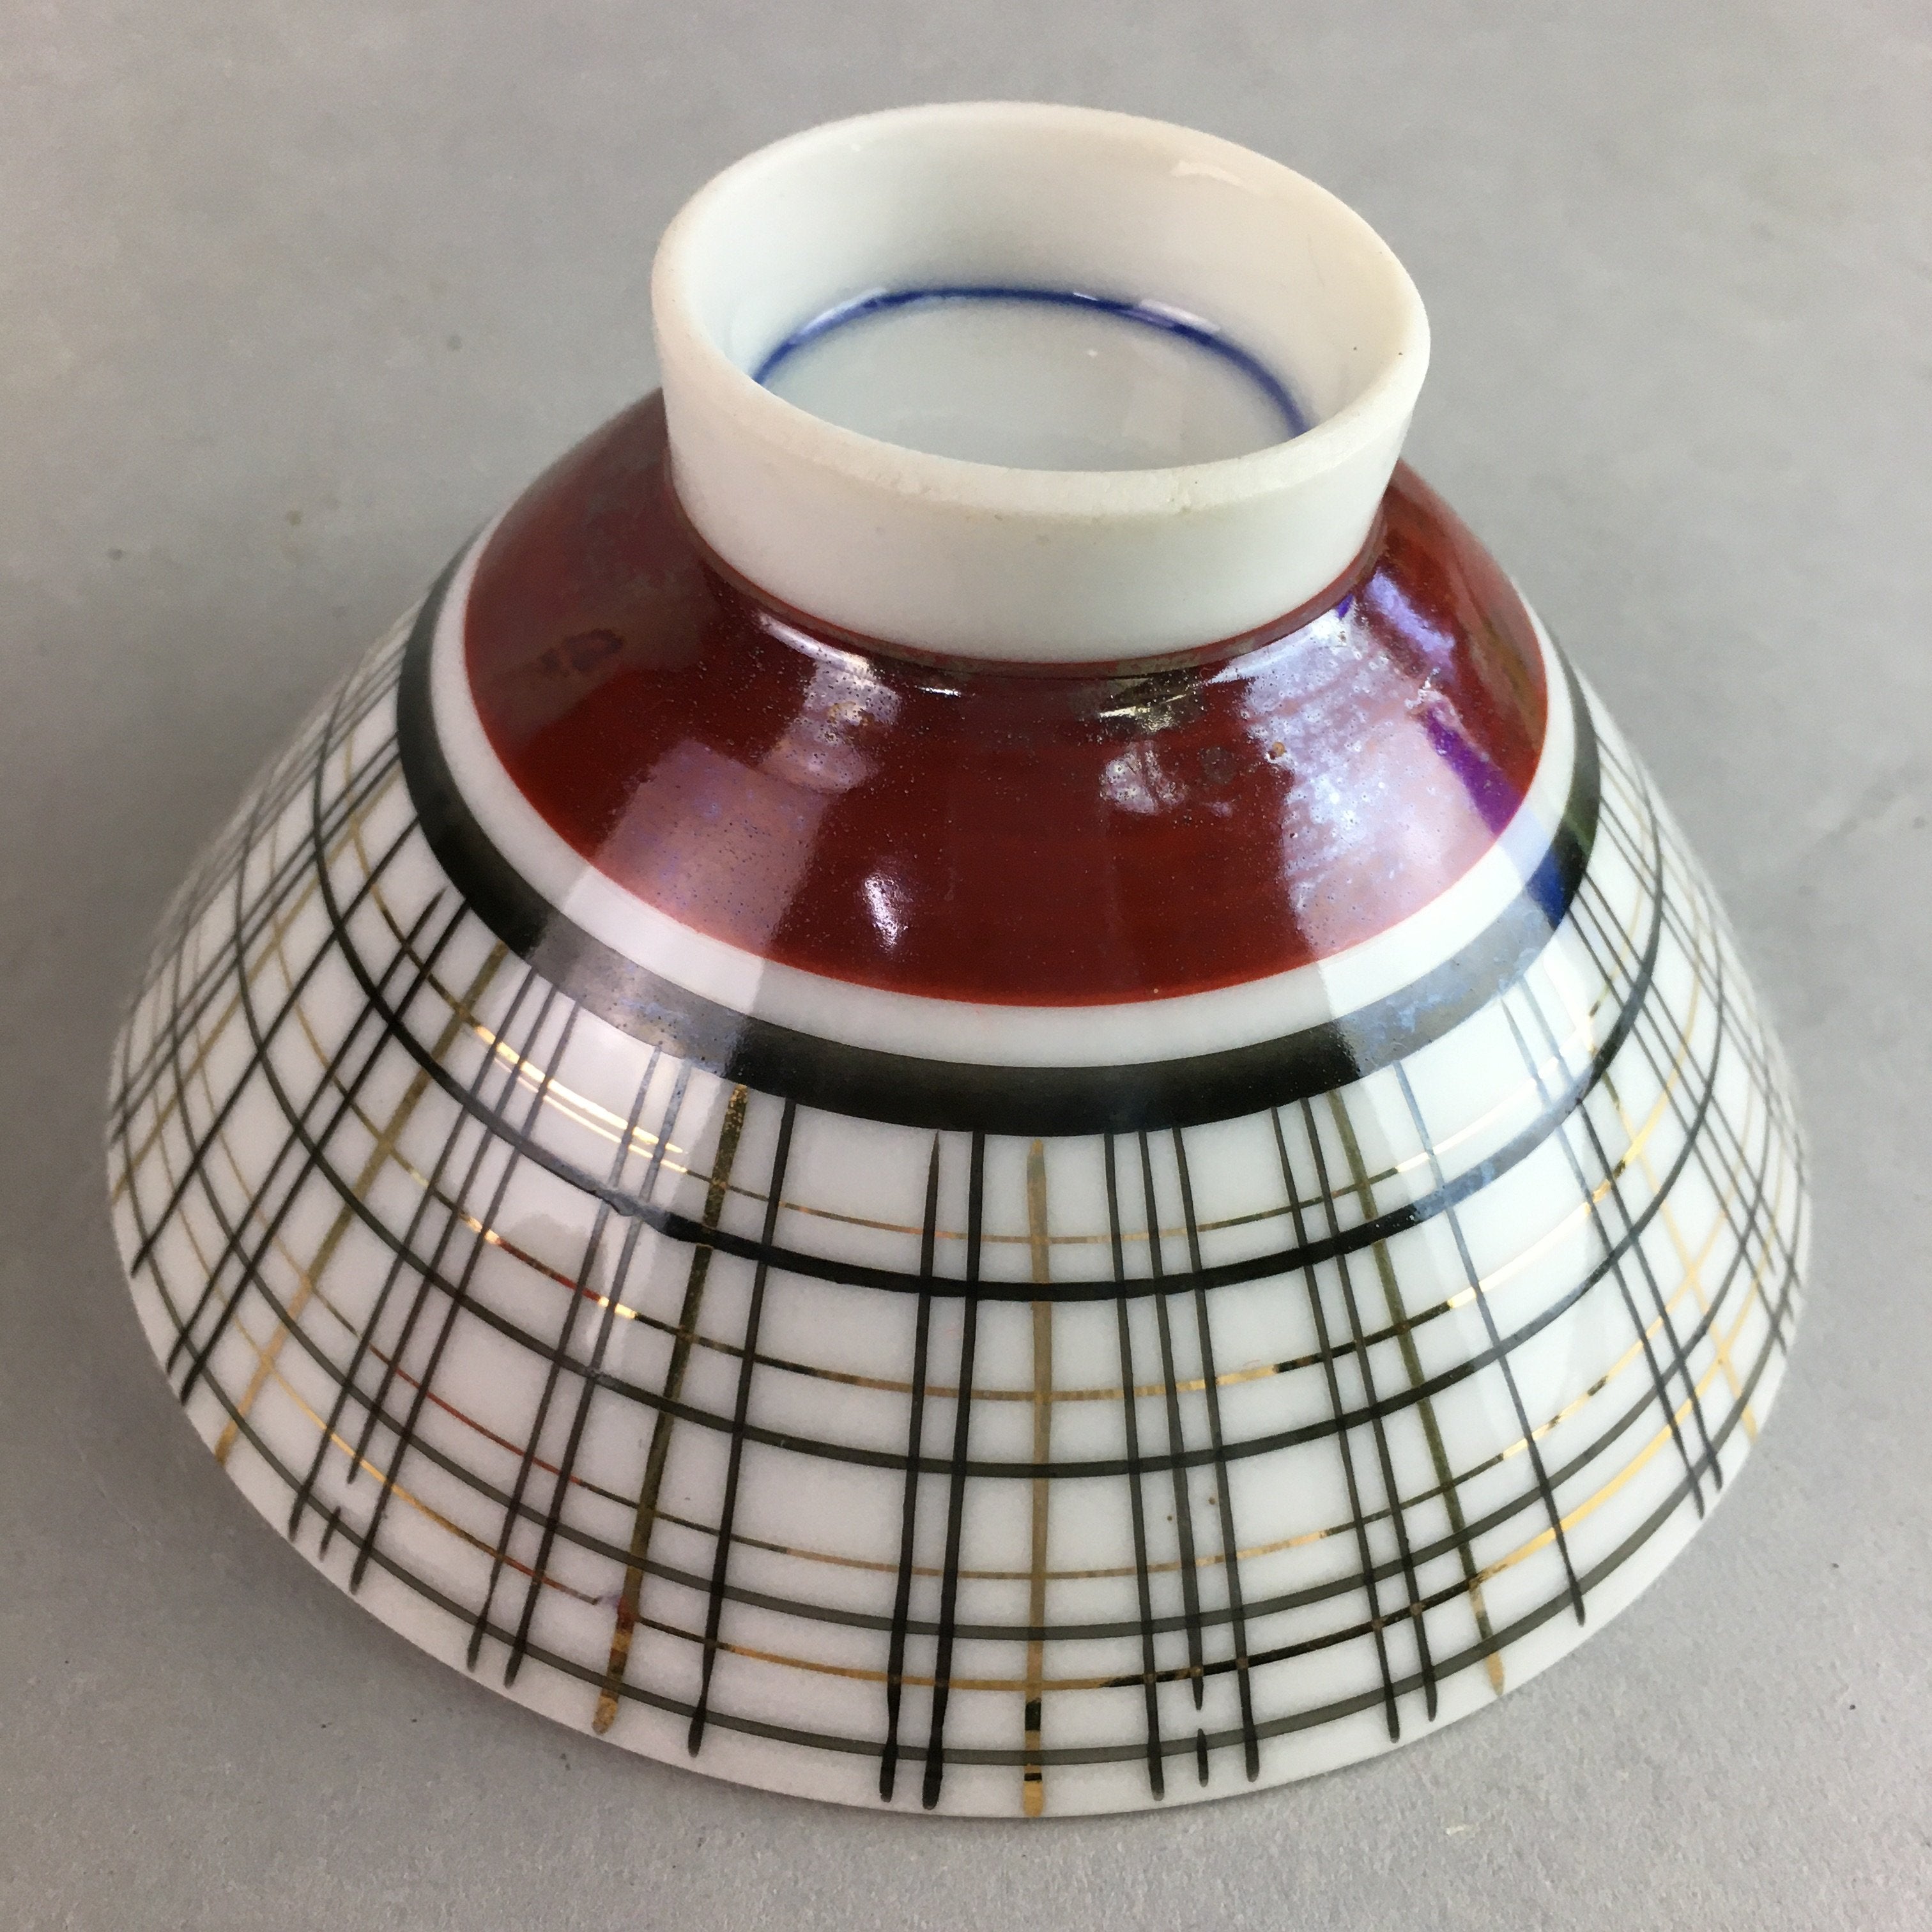 Japanese Porcelain Rice Bowl Vtg Chawan Plaid Black Gold Red PP286